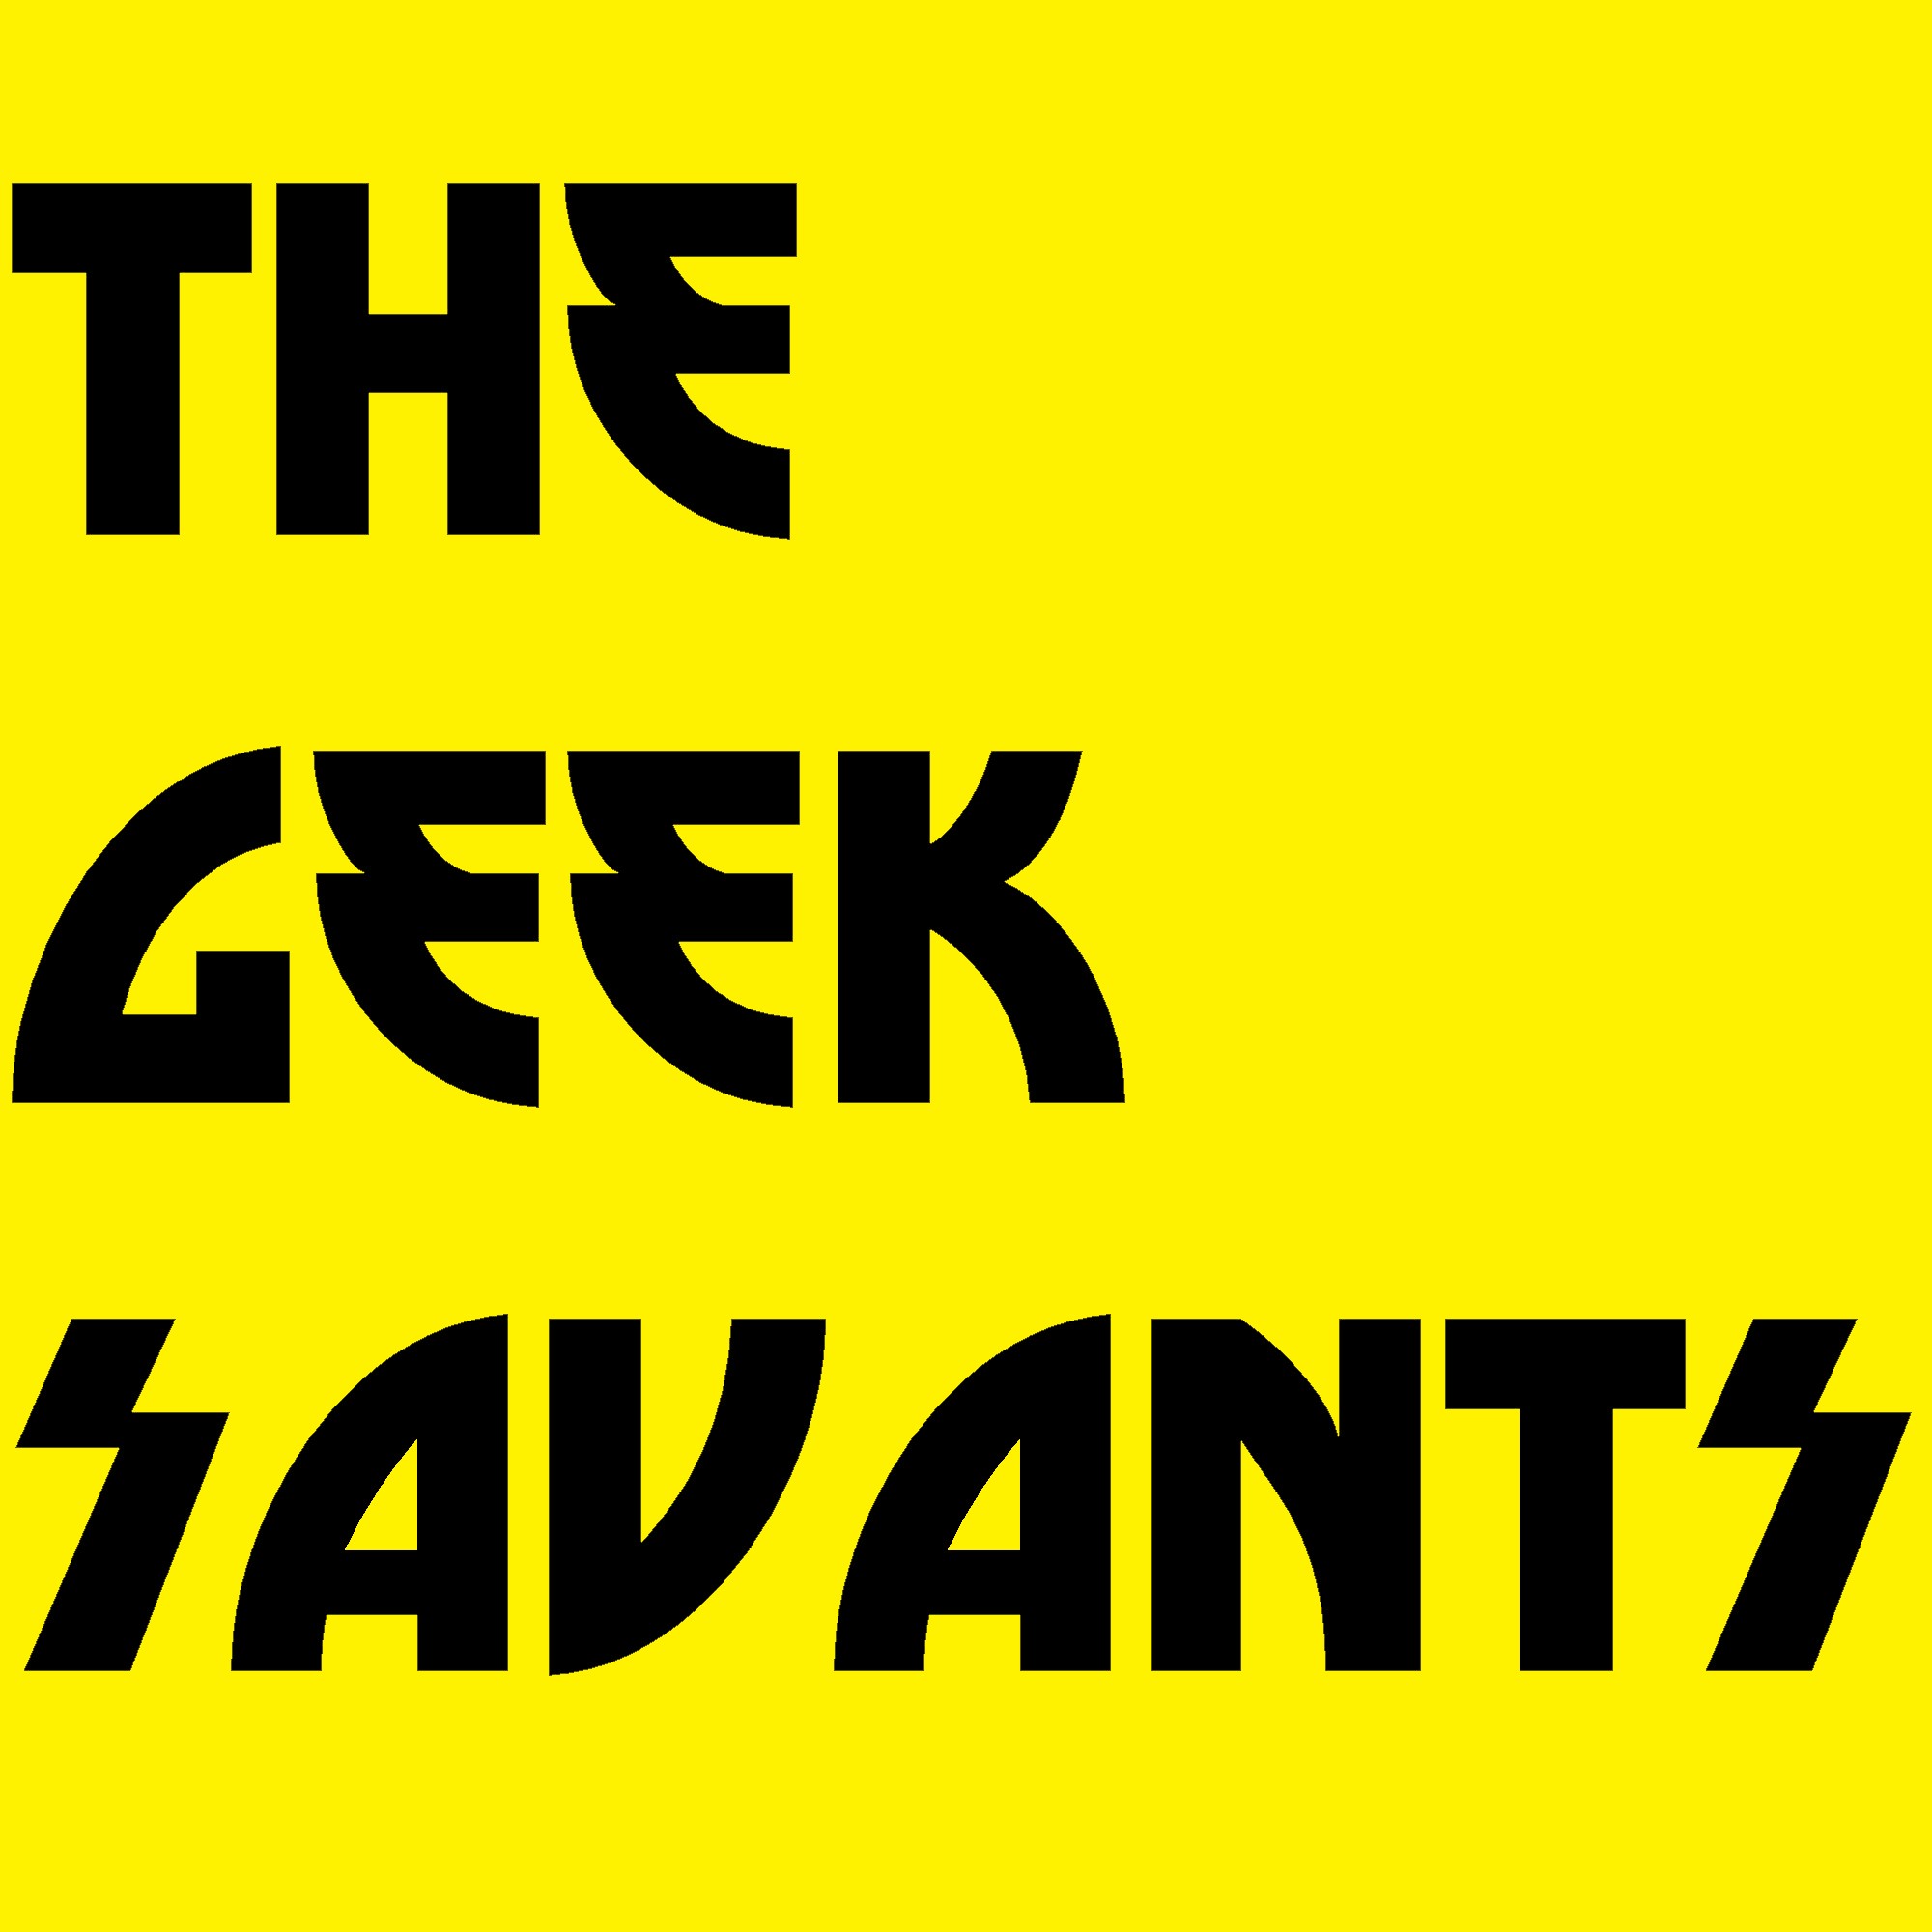 Home of The Geek Savants podcast